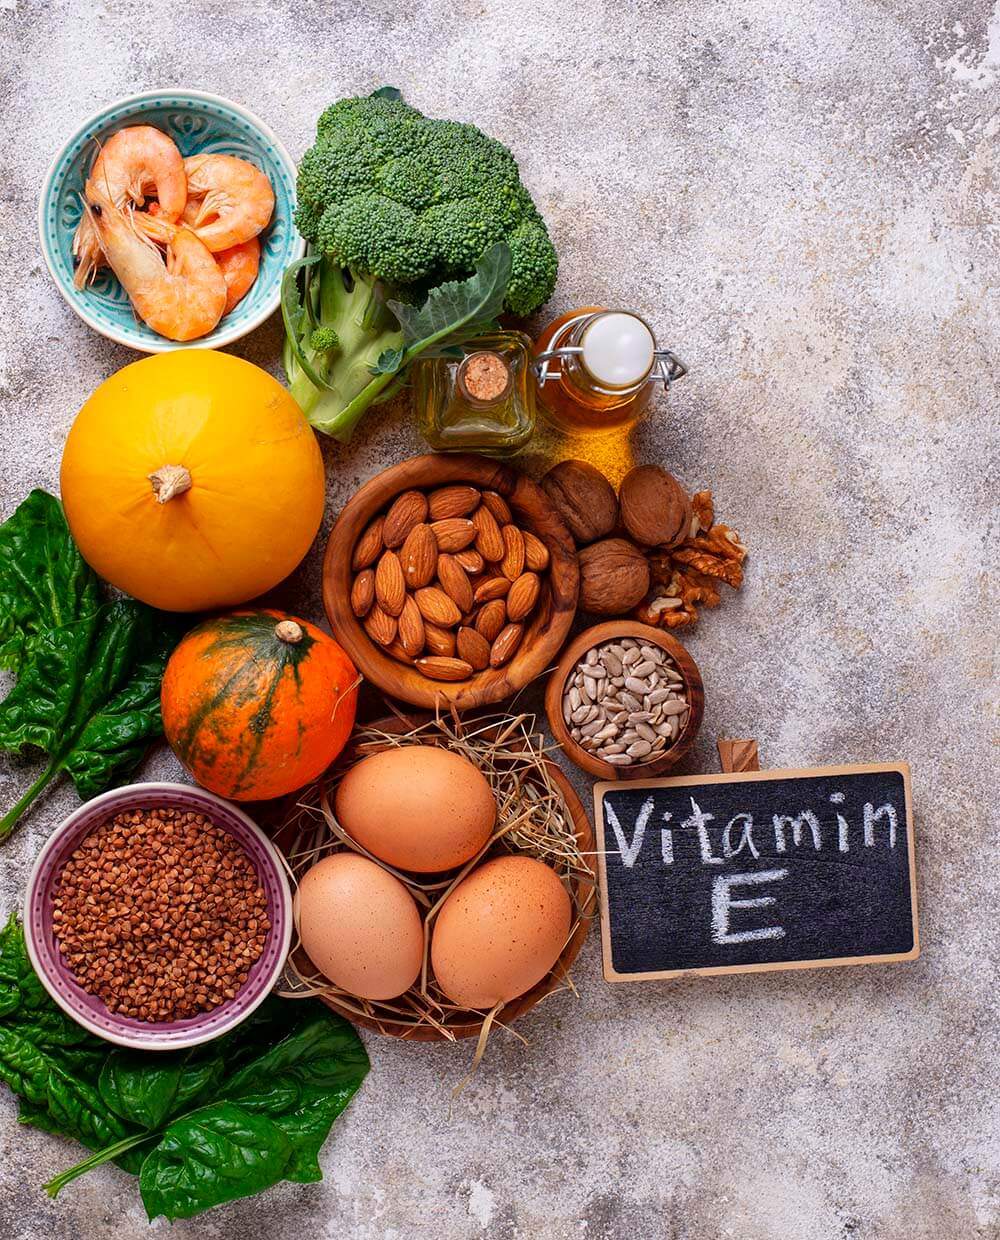 Best Vitamin E Rich Foods